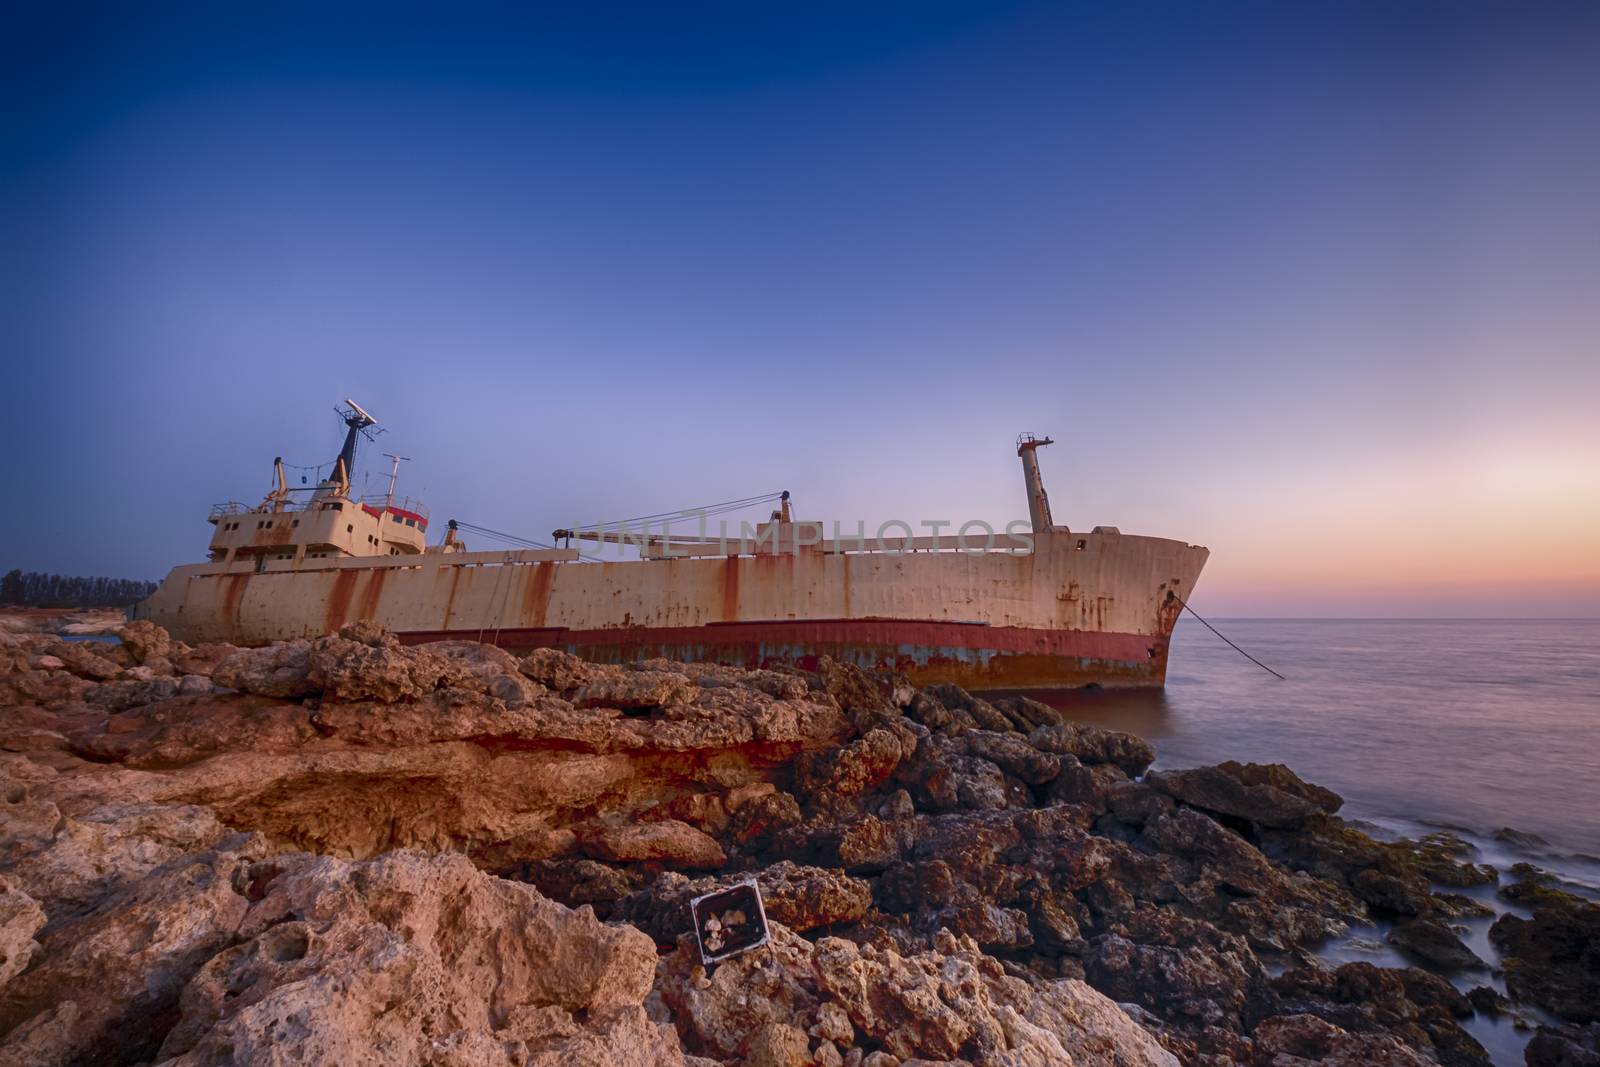 Ship wreck EDRO III in Cyprus by itsajoop